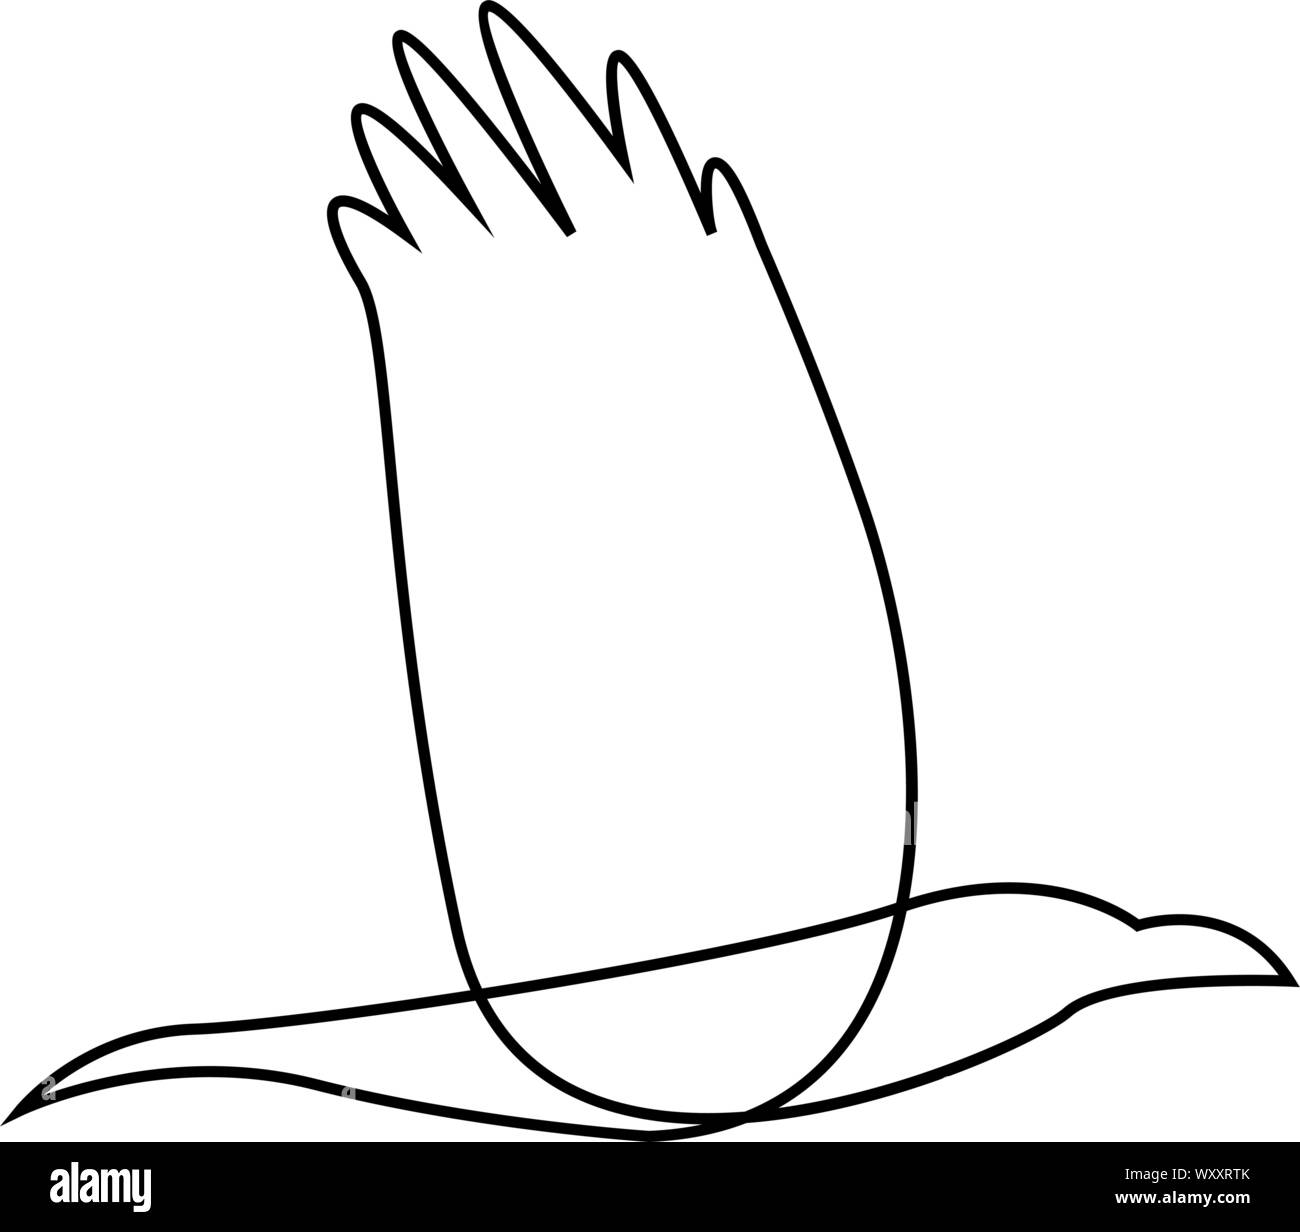 One line bird flies design silhouette. Hand drawn minimalism style. Vector illustration Stock Vector